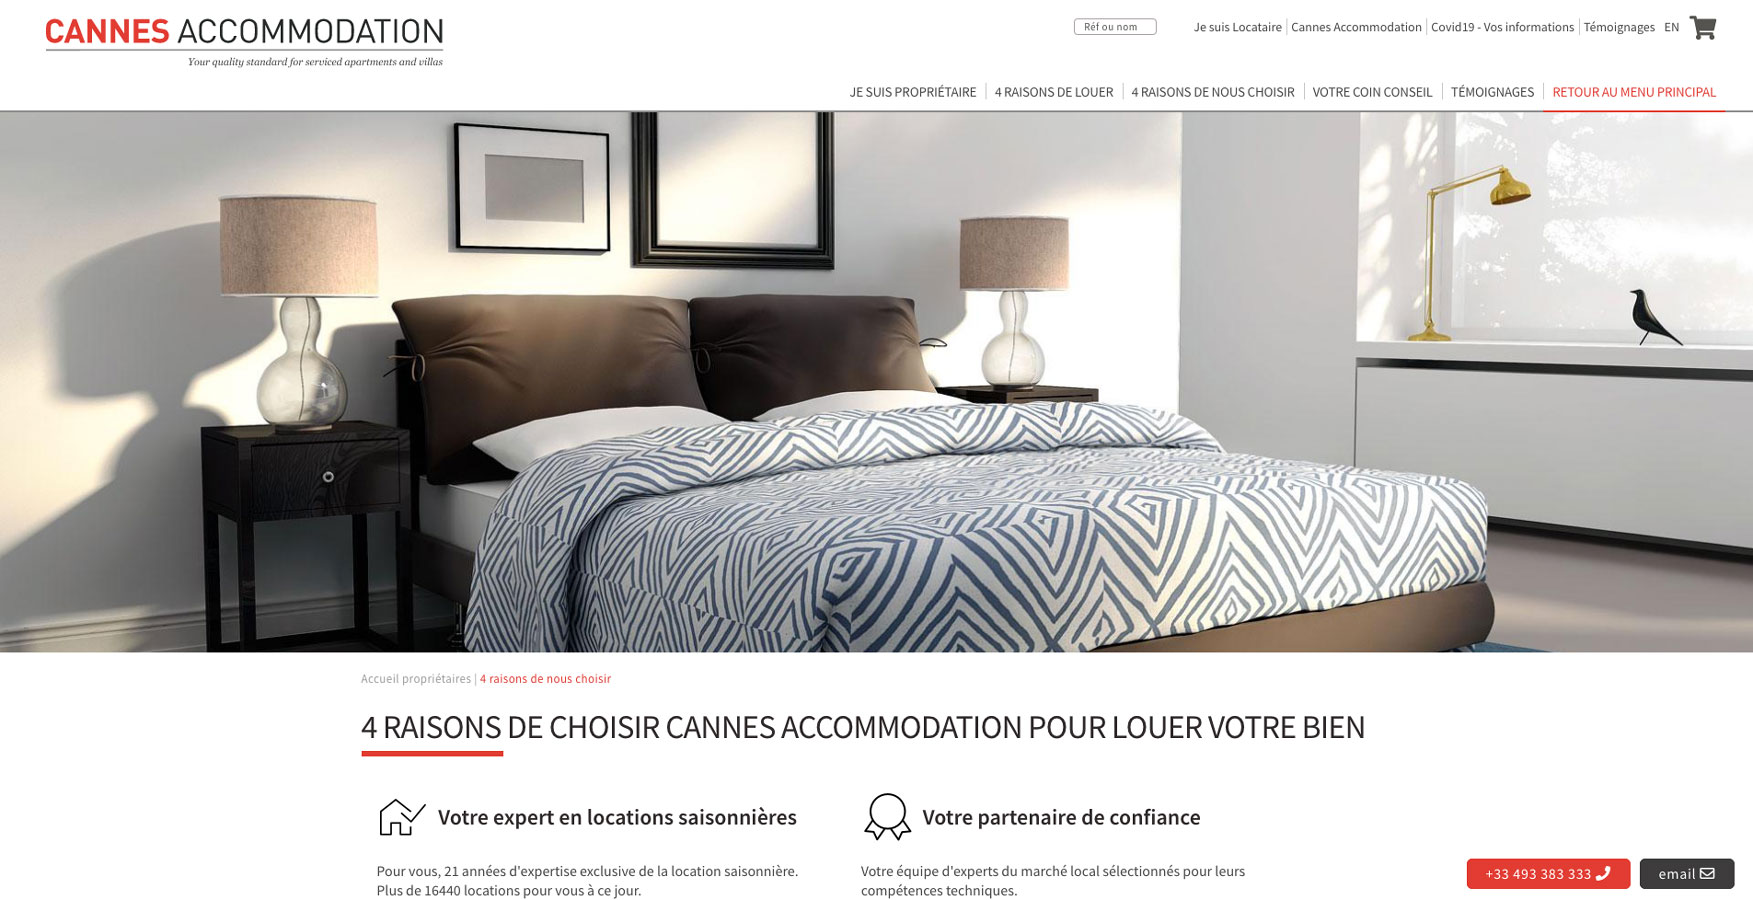 Cannes Accommodation - Agence Colibri, Design, Publicité, Web - Refonte du site cannes-accommodation.com - 2